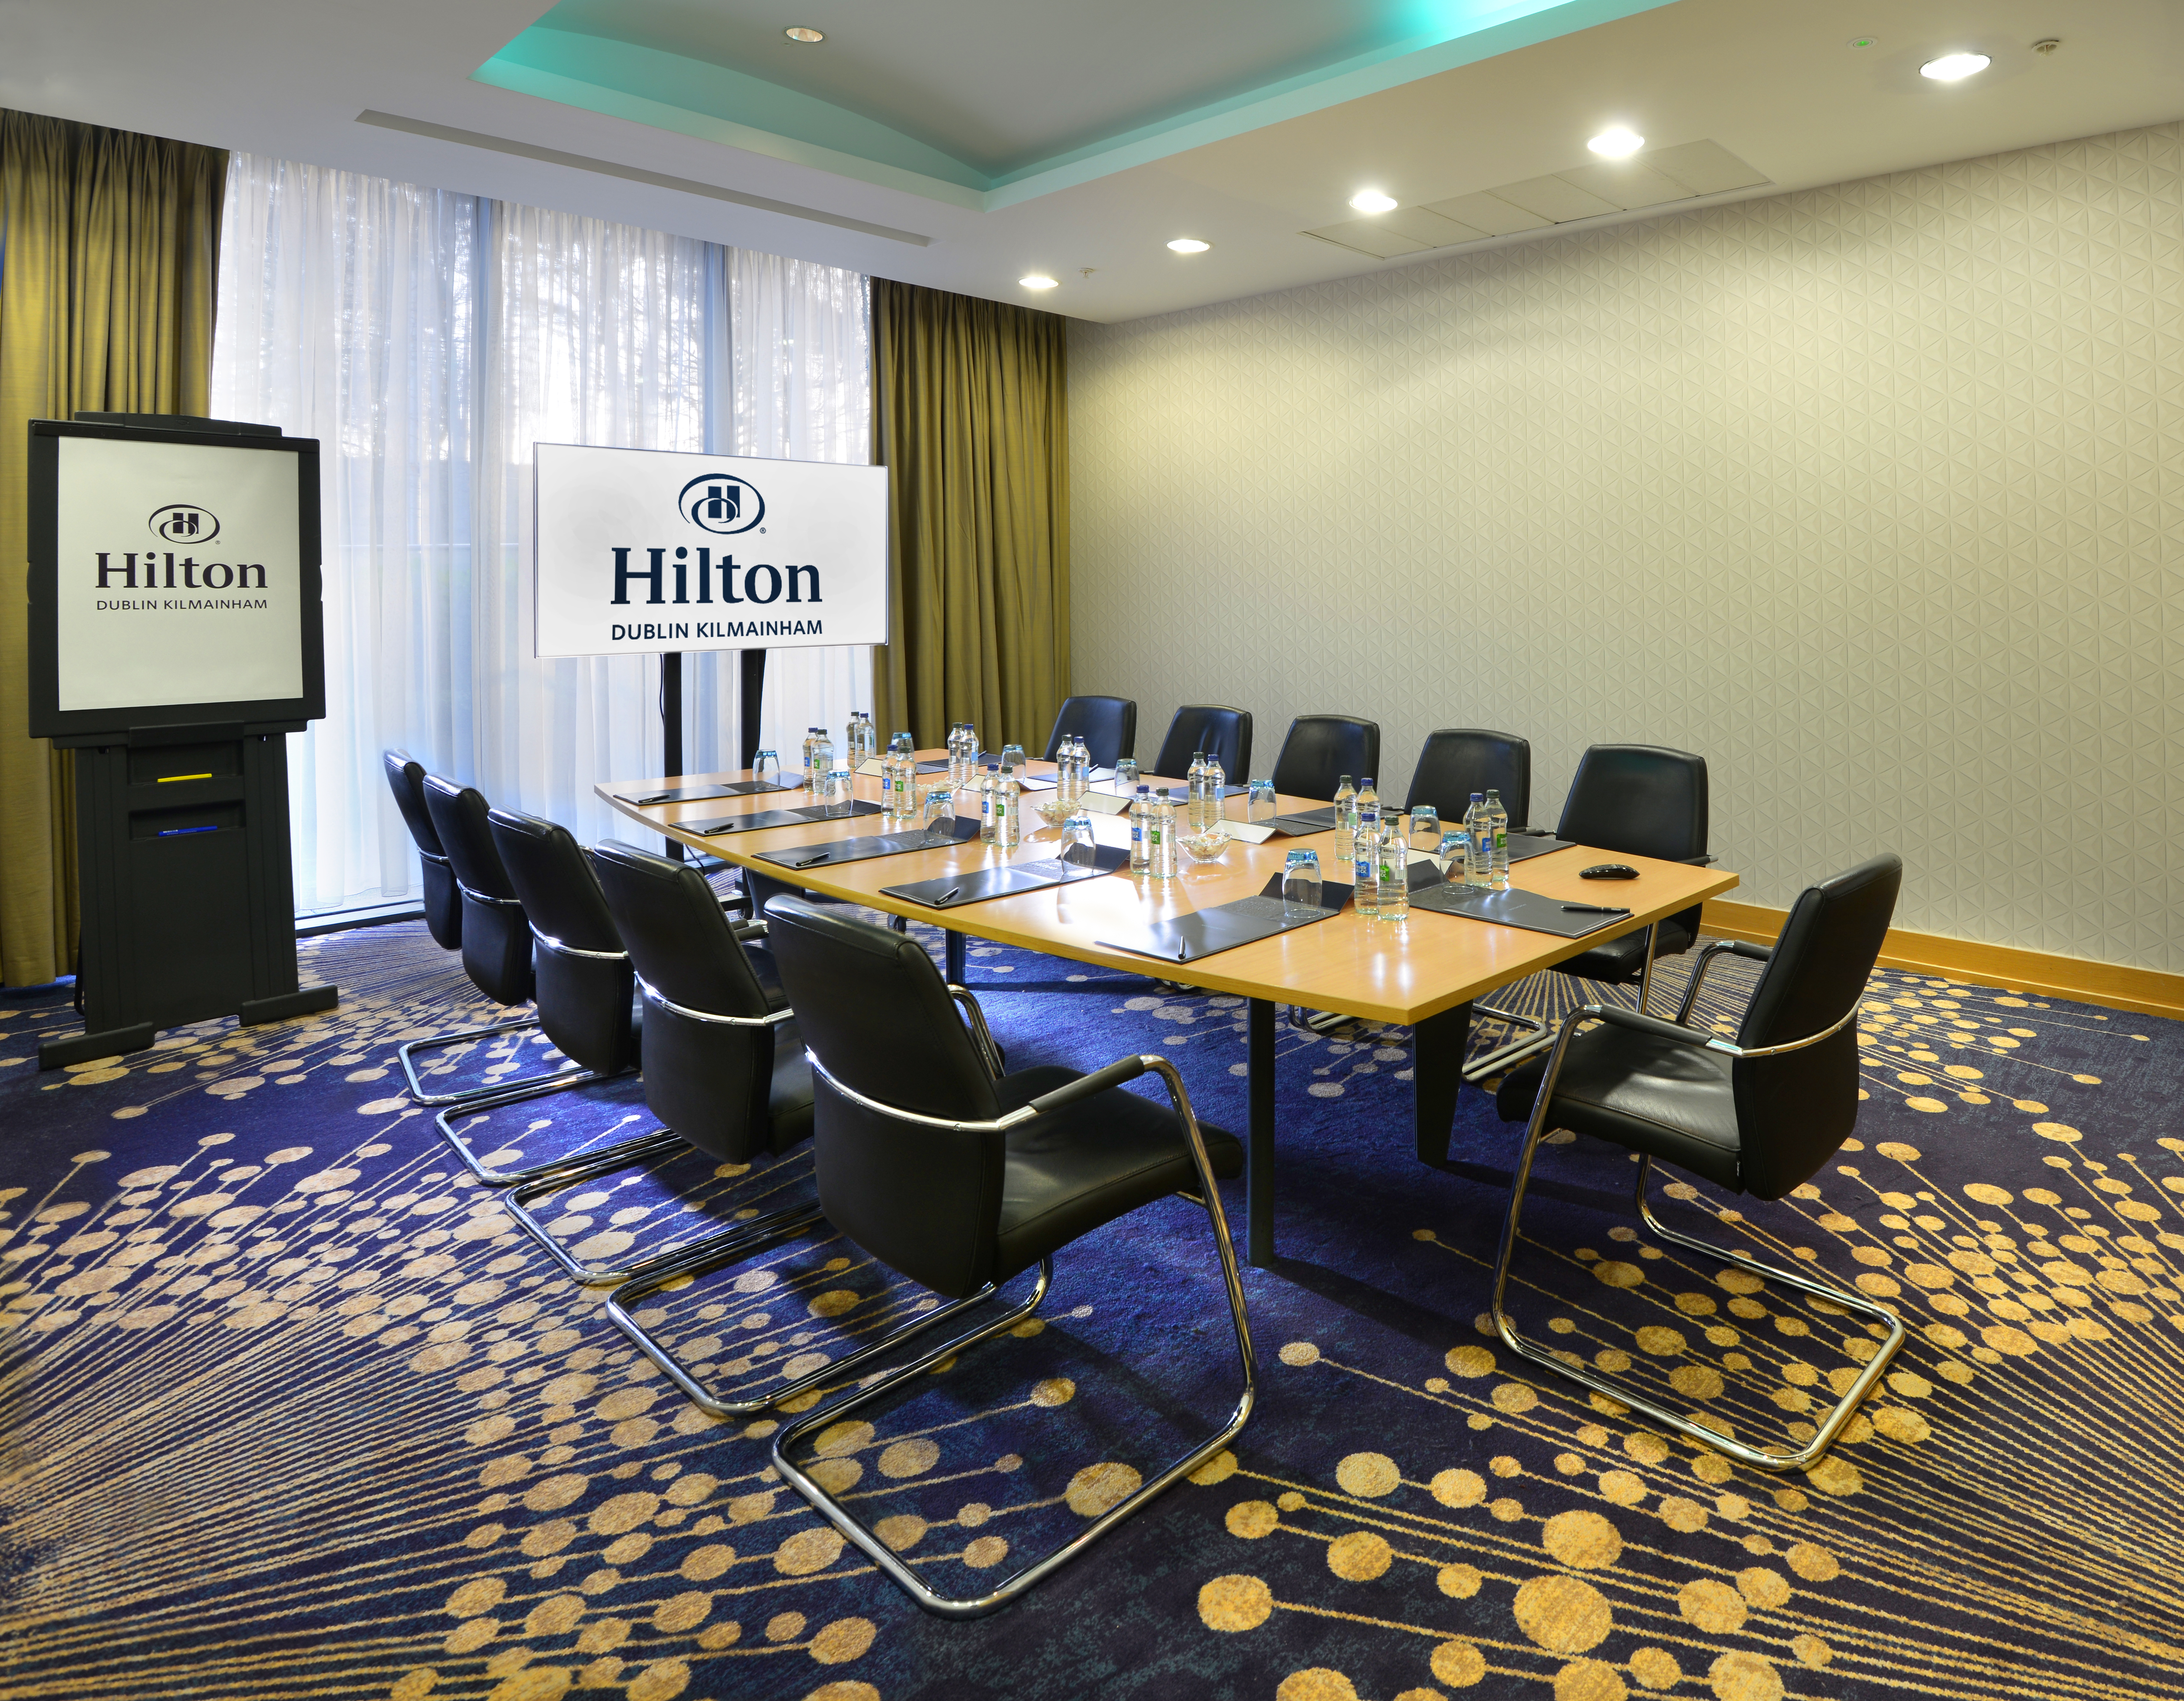 Boardroom style meetings at Hilton Dublin Kilmainham